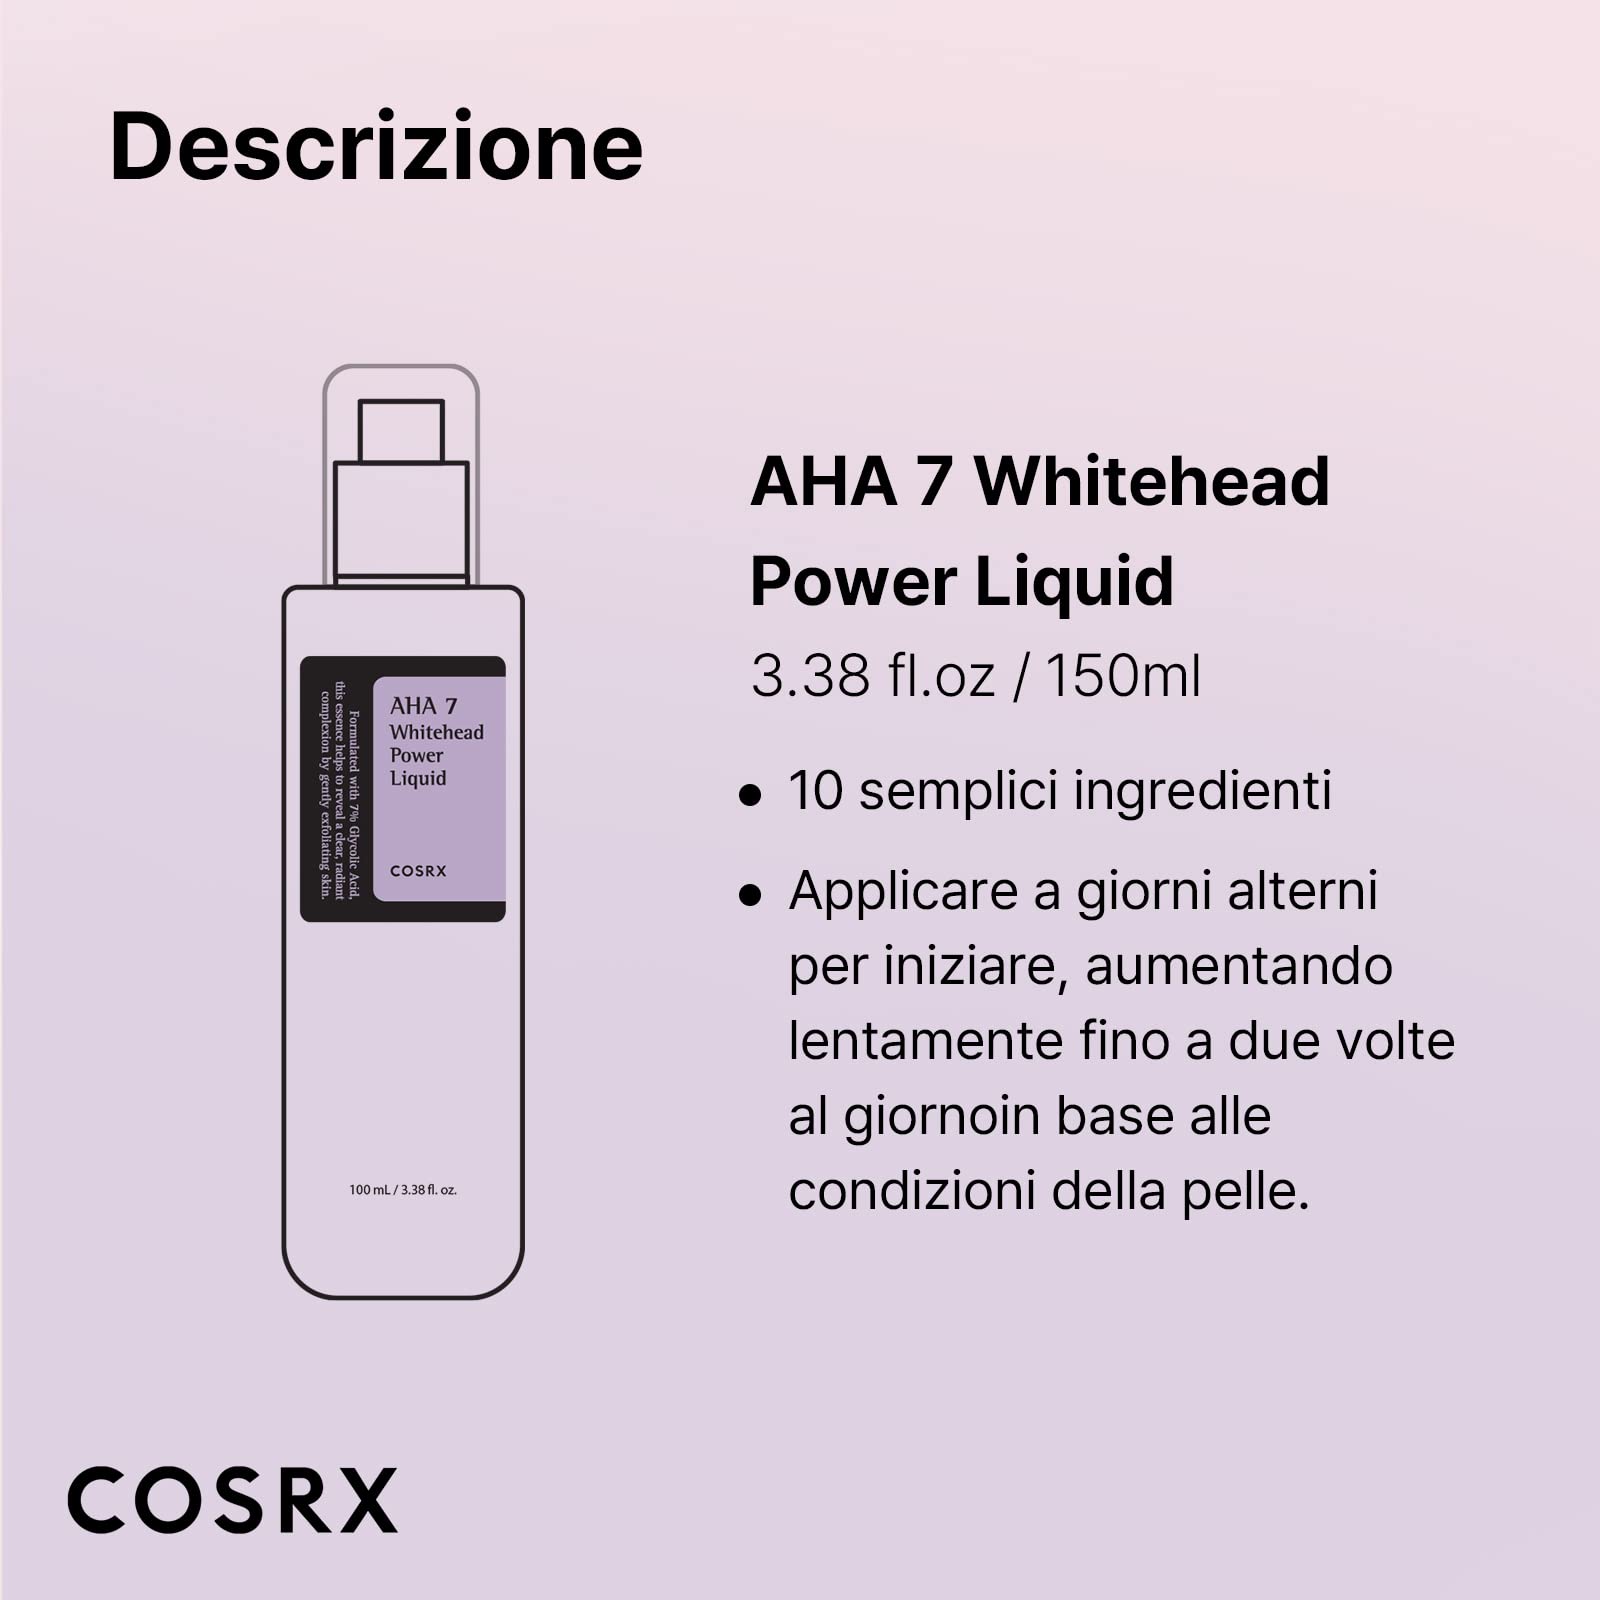 COSRX AHA 7 Whitehead Power Liquid, 100ml